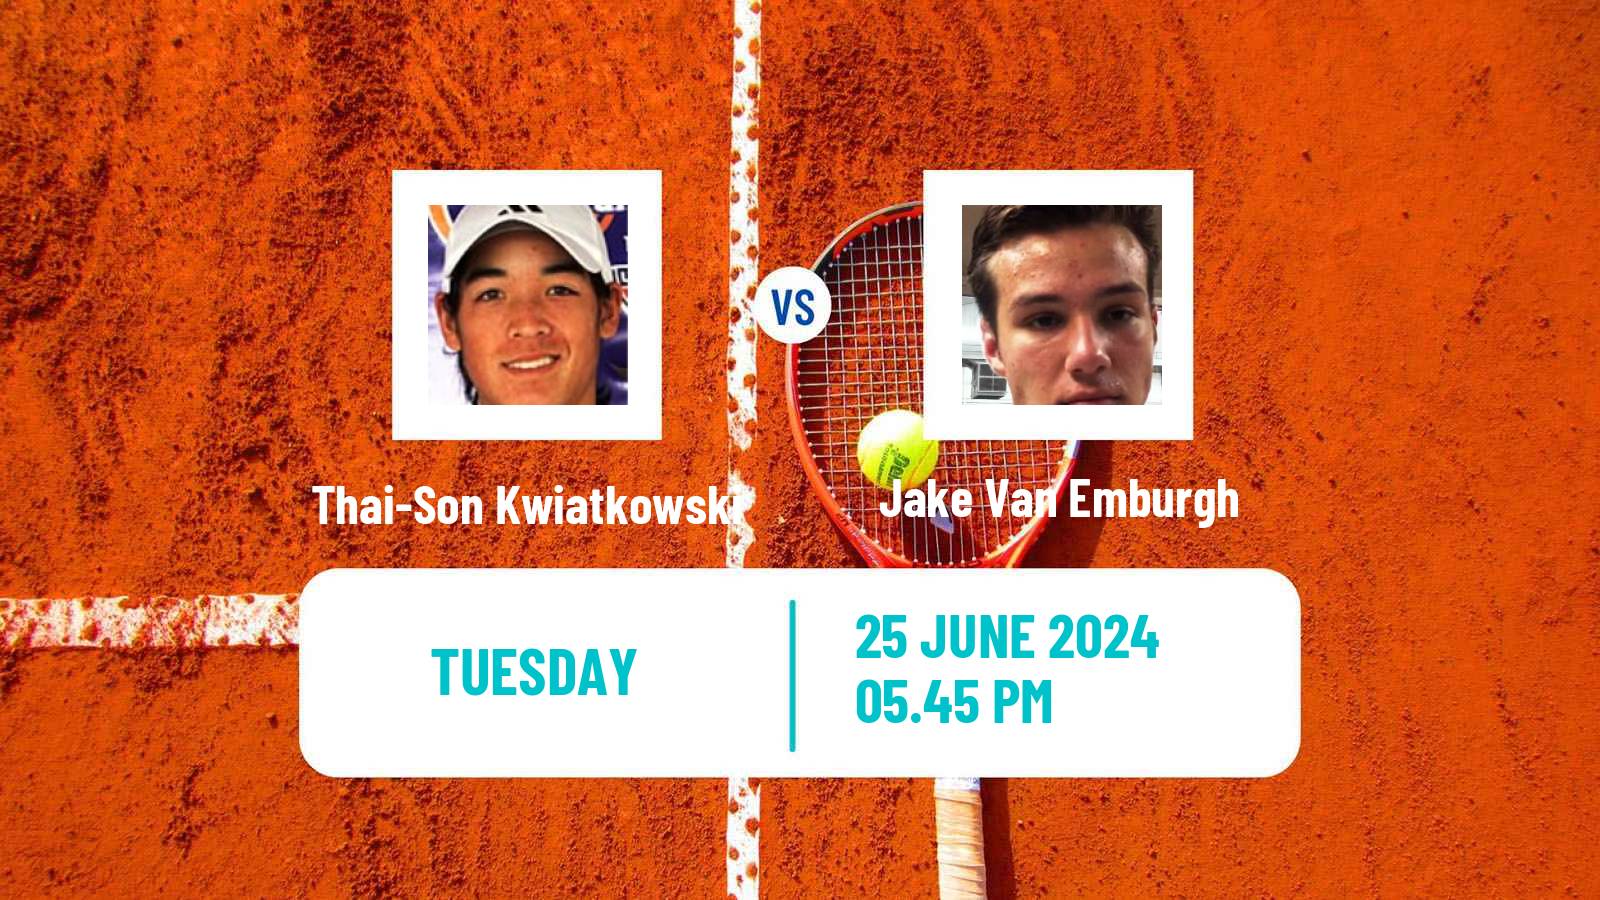 Tennis ITF M15 Los Angeles Ca Men Thai-Son Kwiatkowski - Jake Van Emburgh